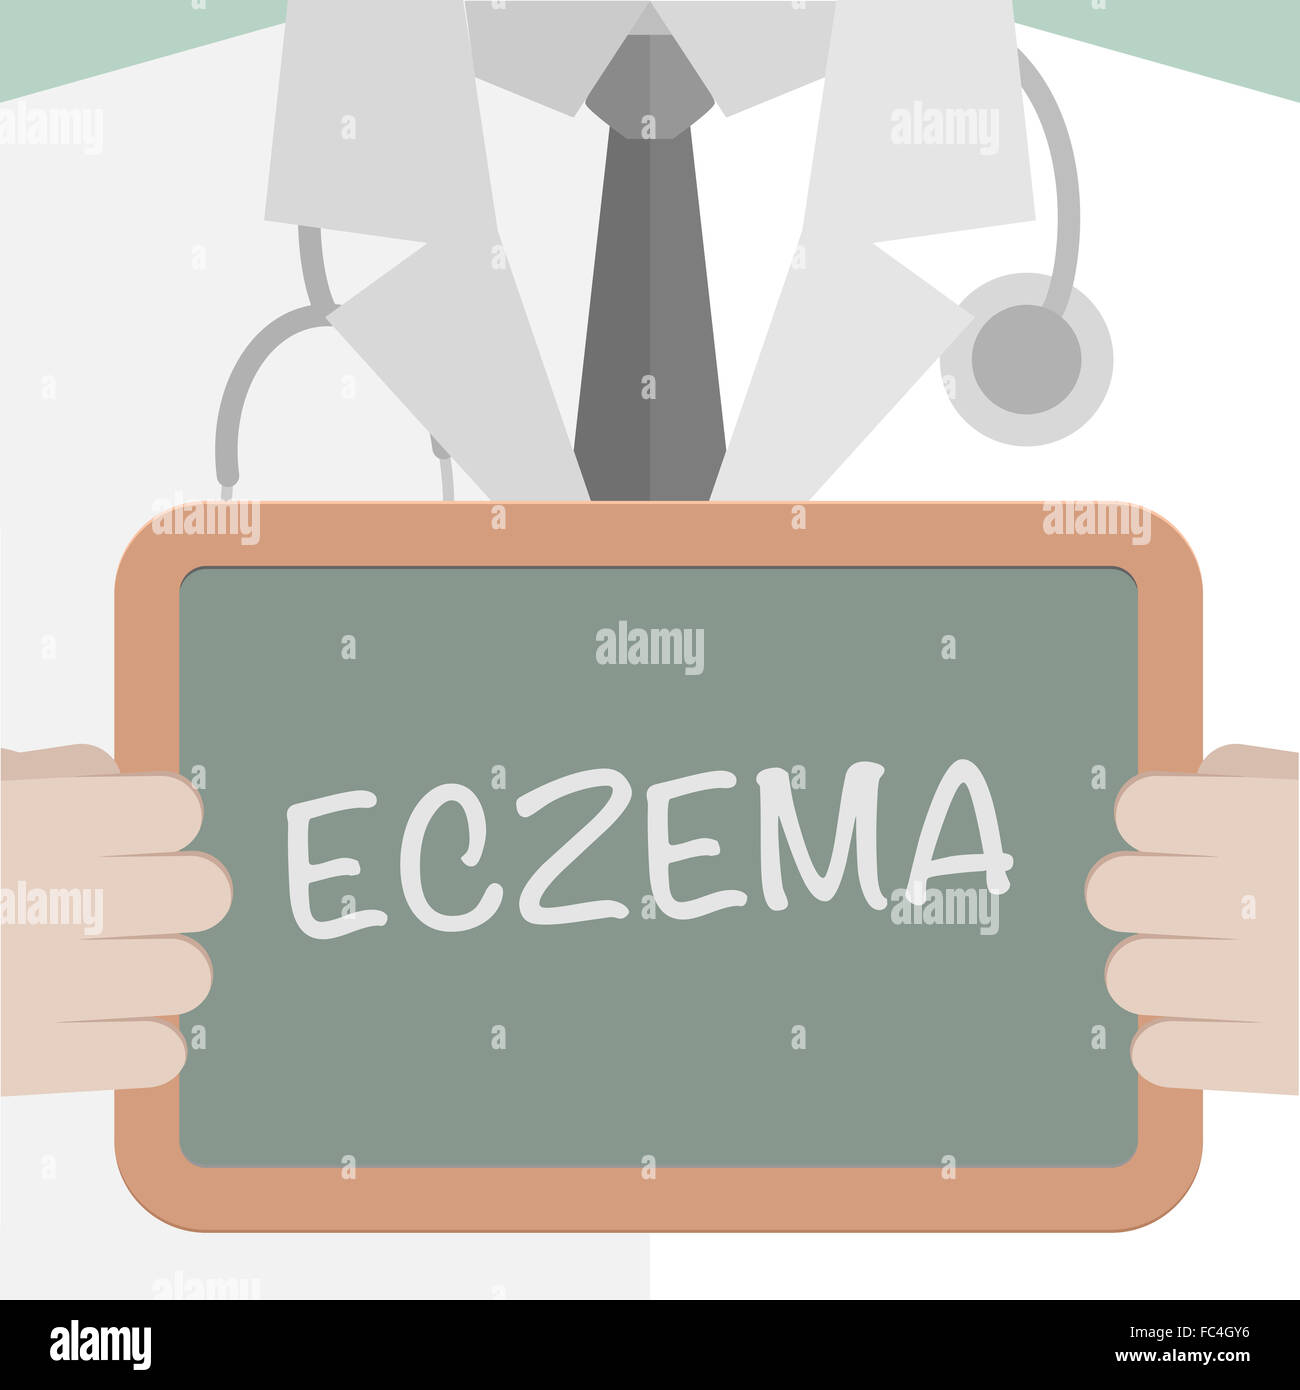 Eczema Stock Photo